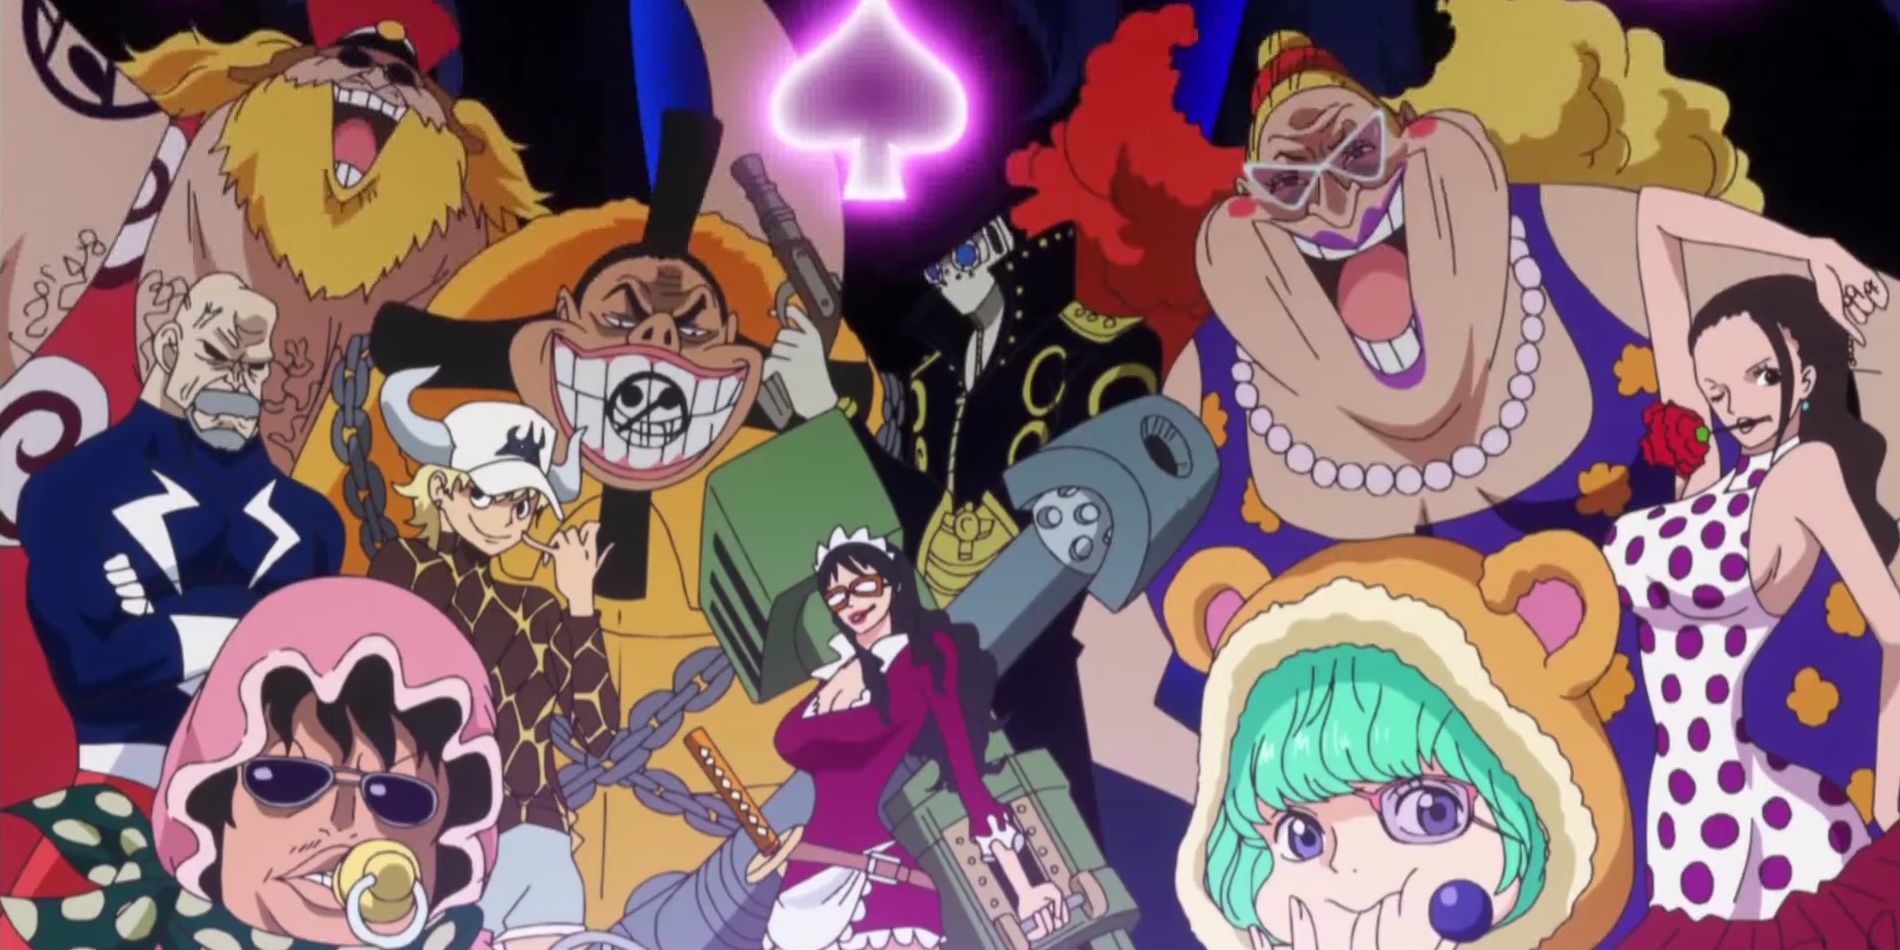 Collage of Donquixote Doflamingo's family in One Piece anime.